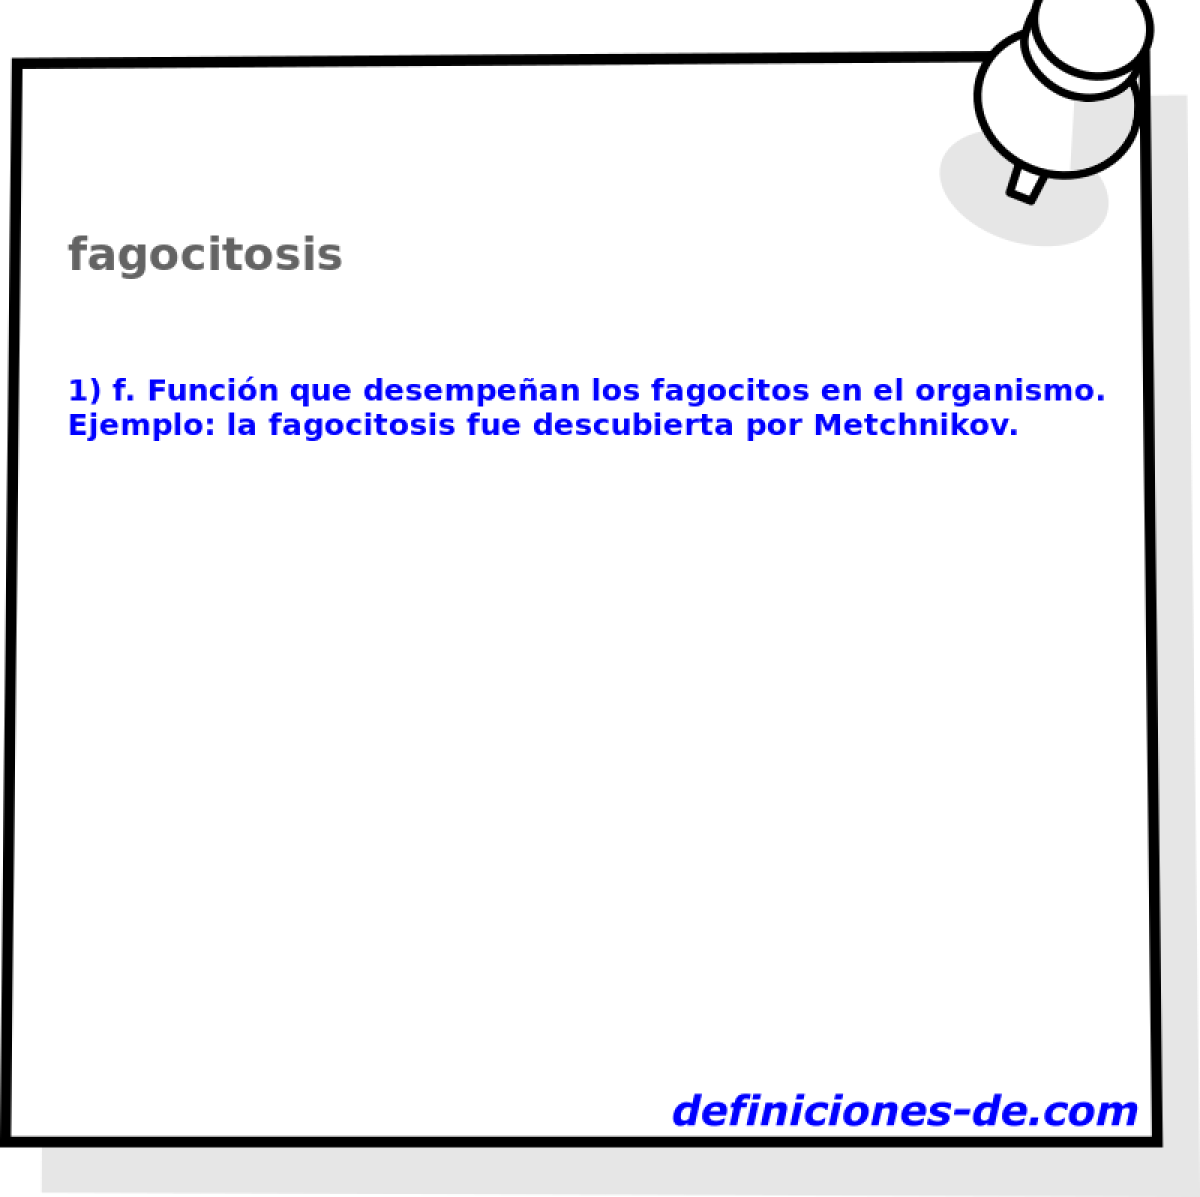 fagocitosis 